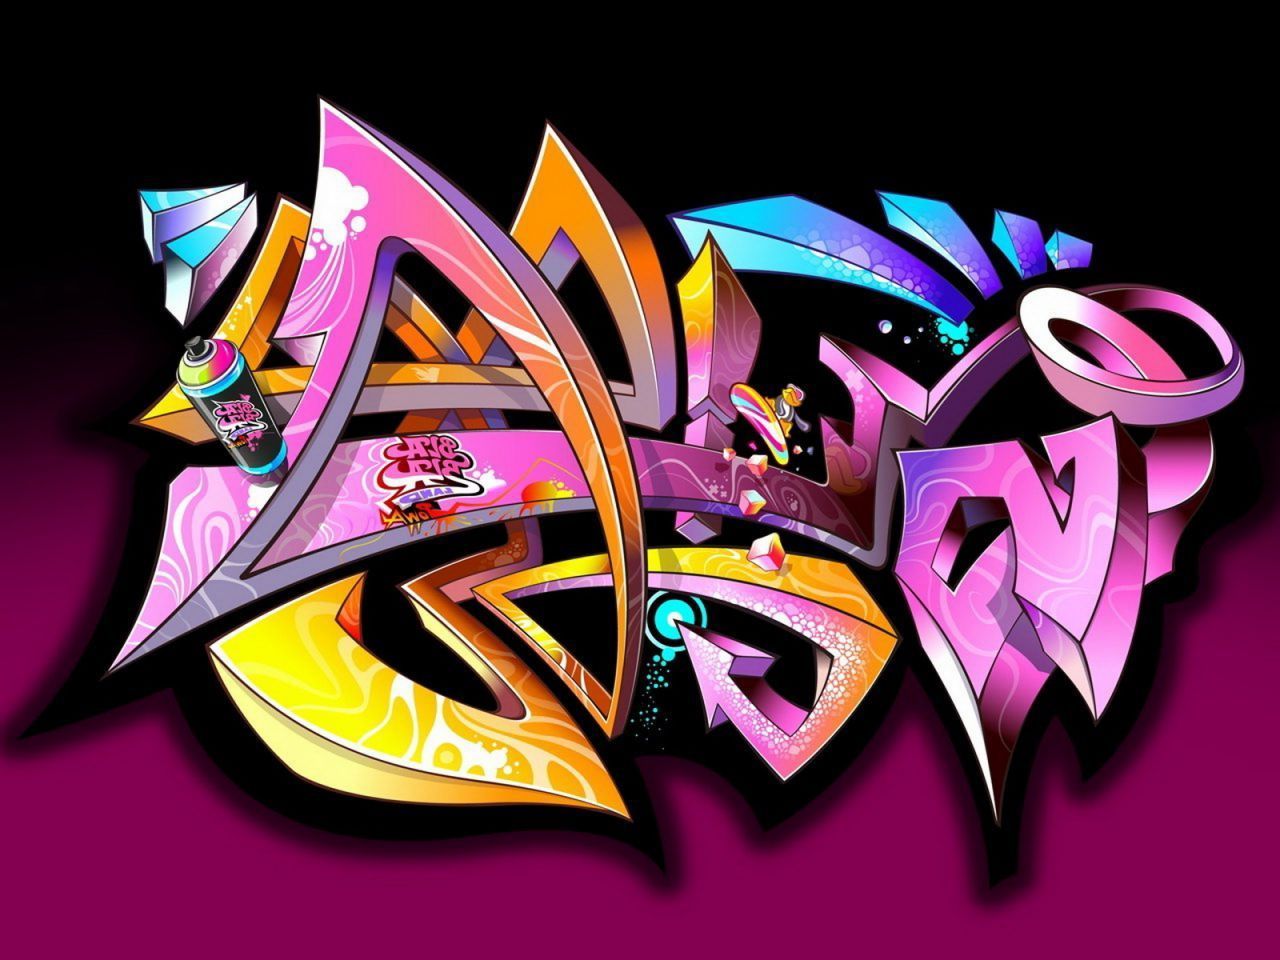 graffiti wallpaper hd background download desktop • iphones wallpapers